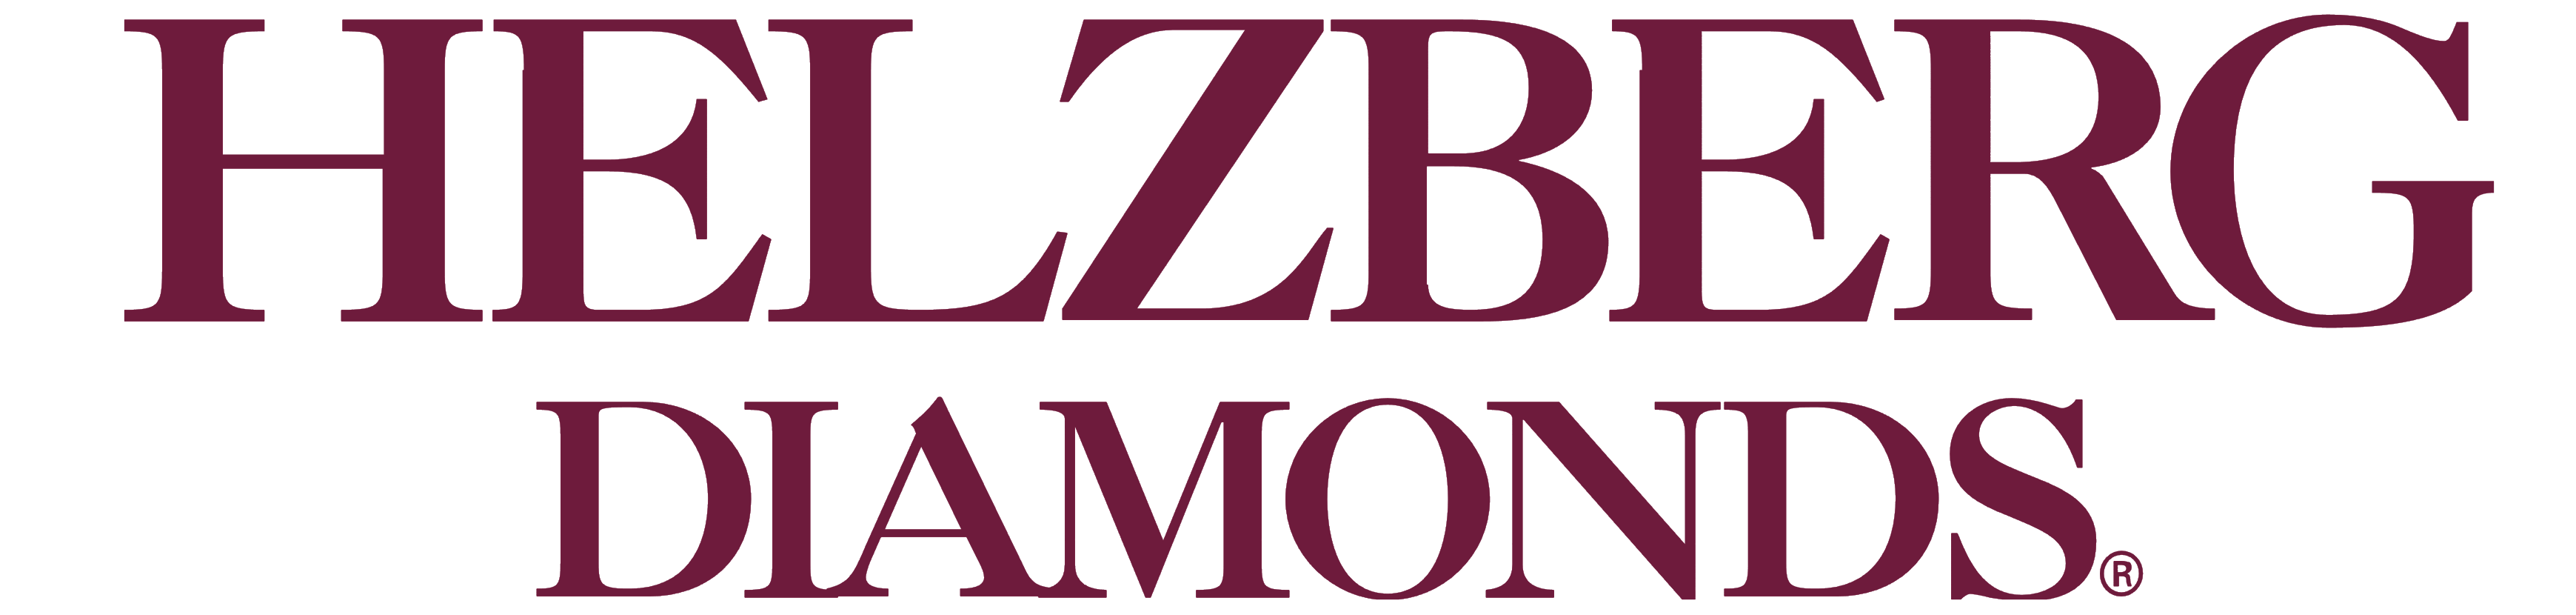 Helzberg Diamonds logo, logotype